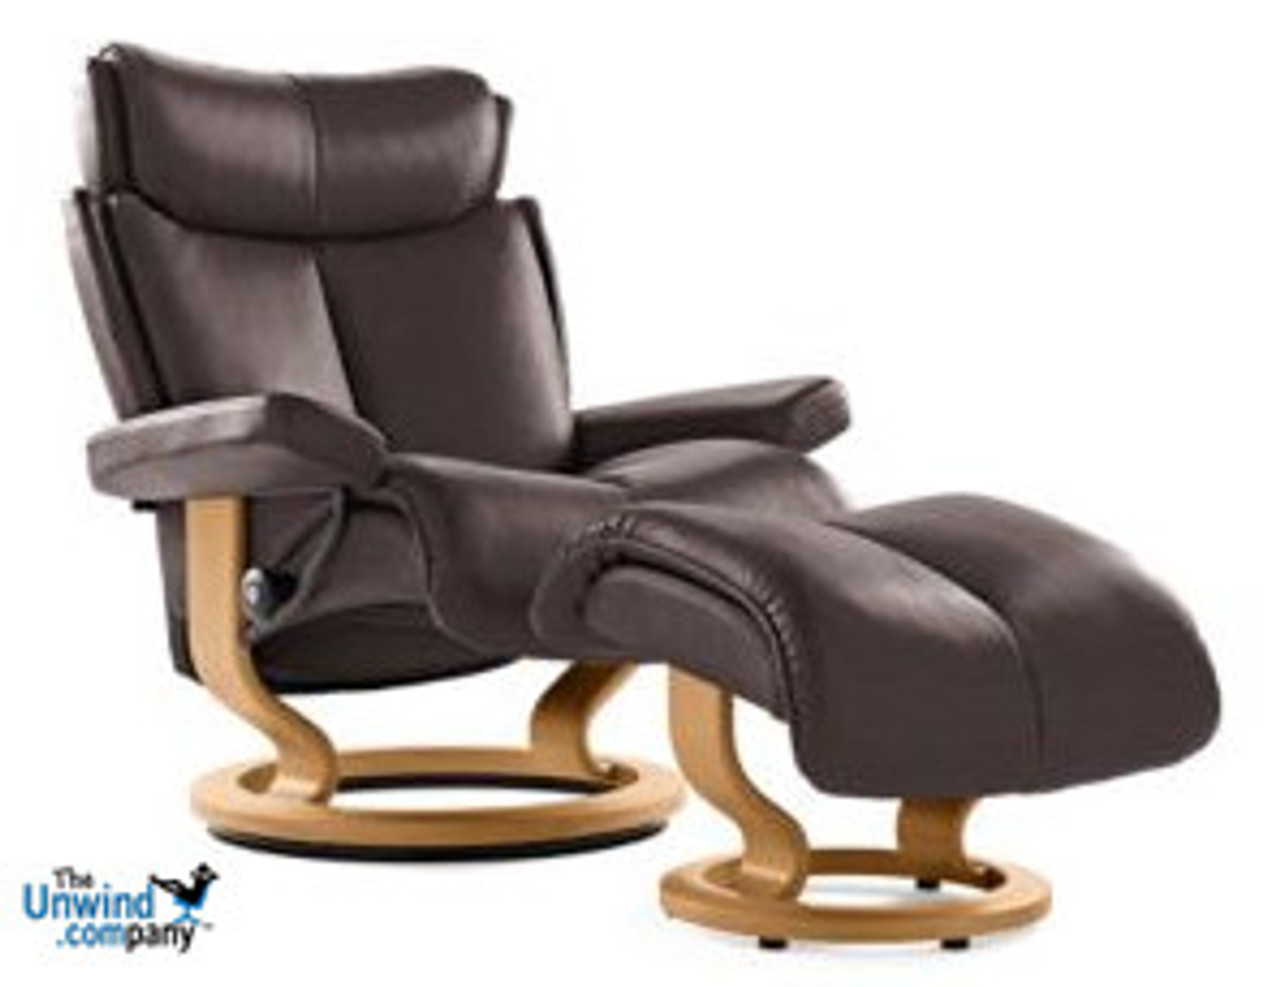 Seat Cushion and Chair Cushion for Wheel chair Kitchen Chairs Reducing  Stress